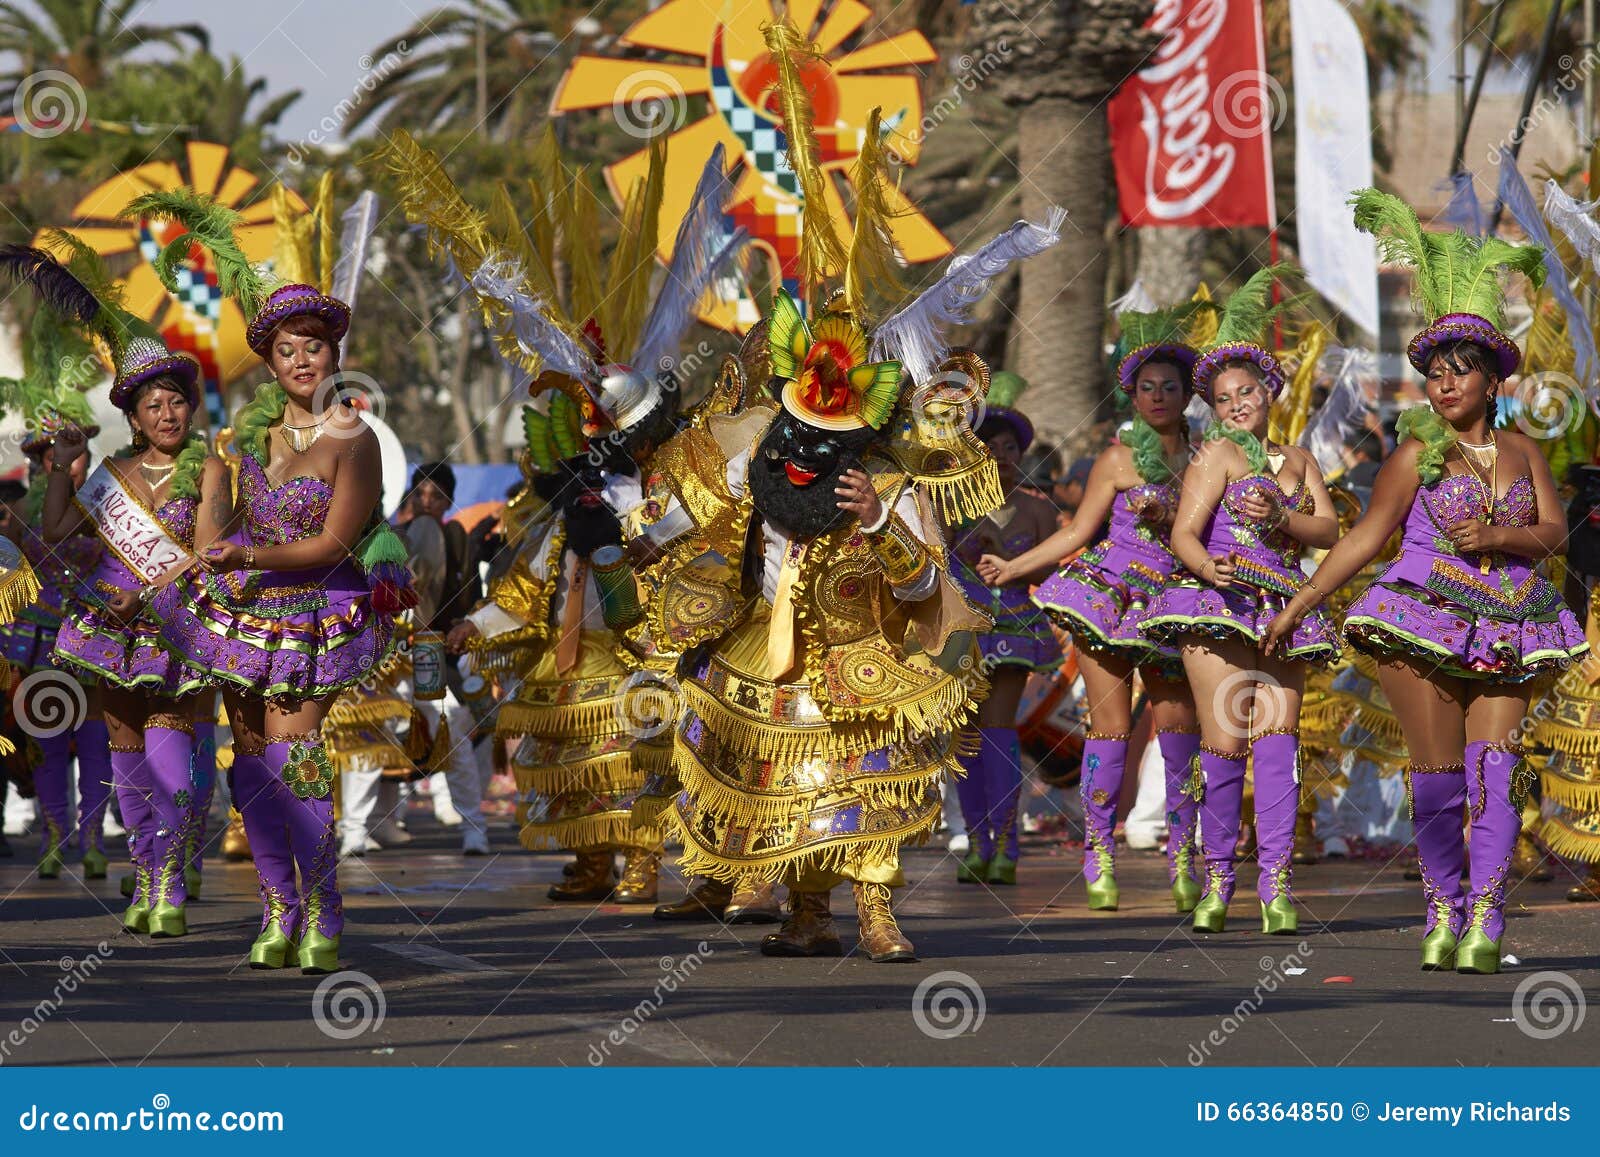 Morenada Dance Group - Arica, Chile Editorial Image - Image of carnival ...